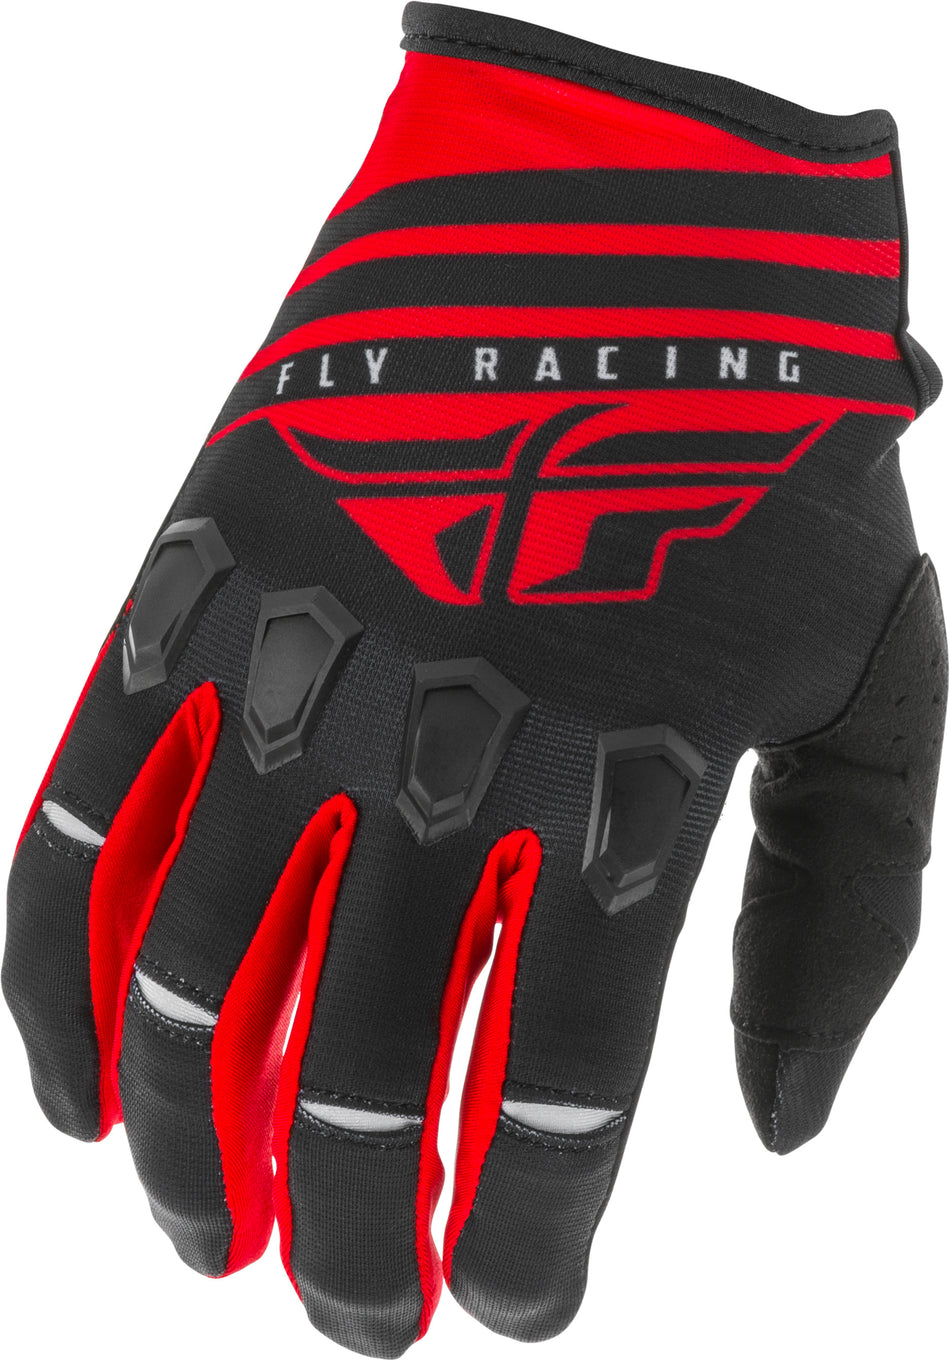 FLY RACING Kinetic K220 Gloves Red/Black/White Sz 12 373-51312